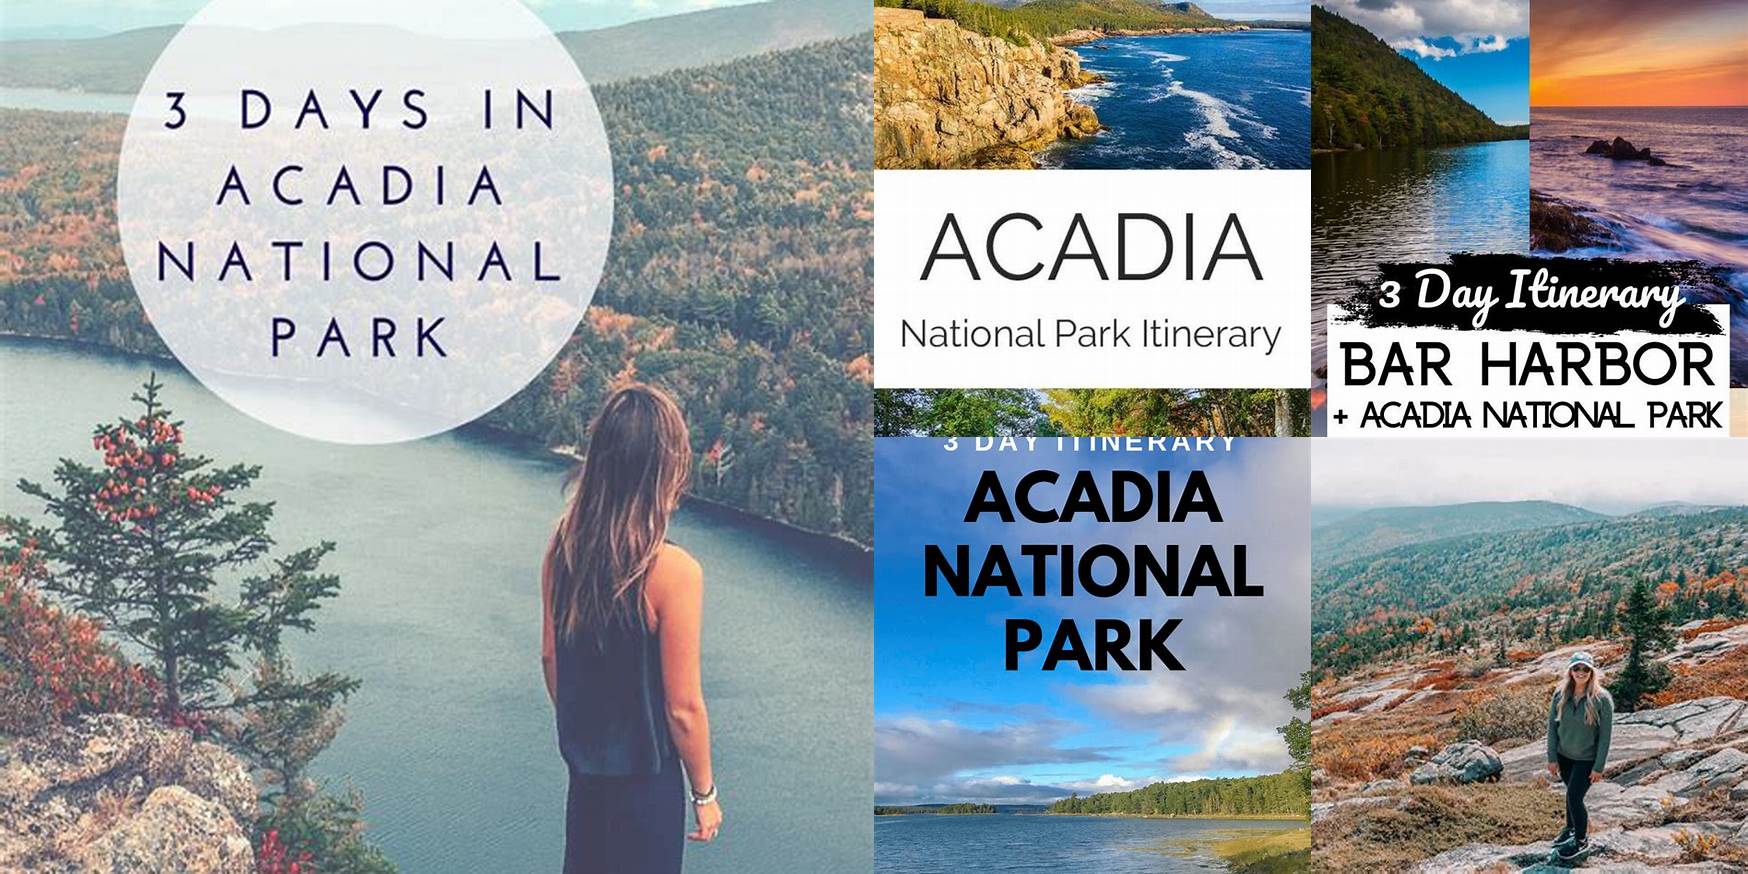 Acadia National Park 3 Day Itinerary